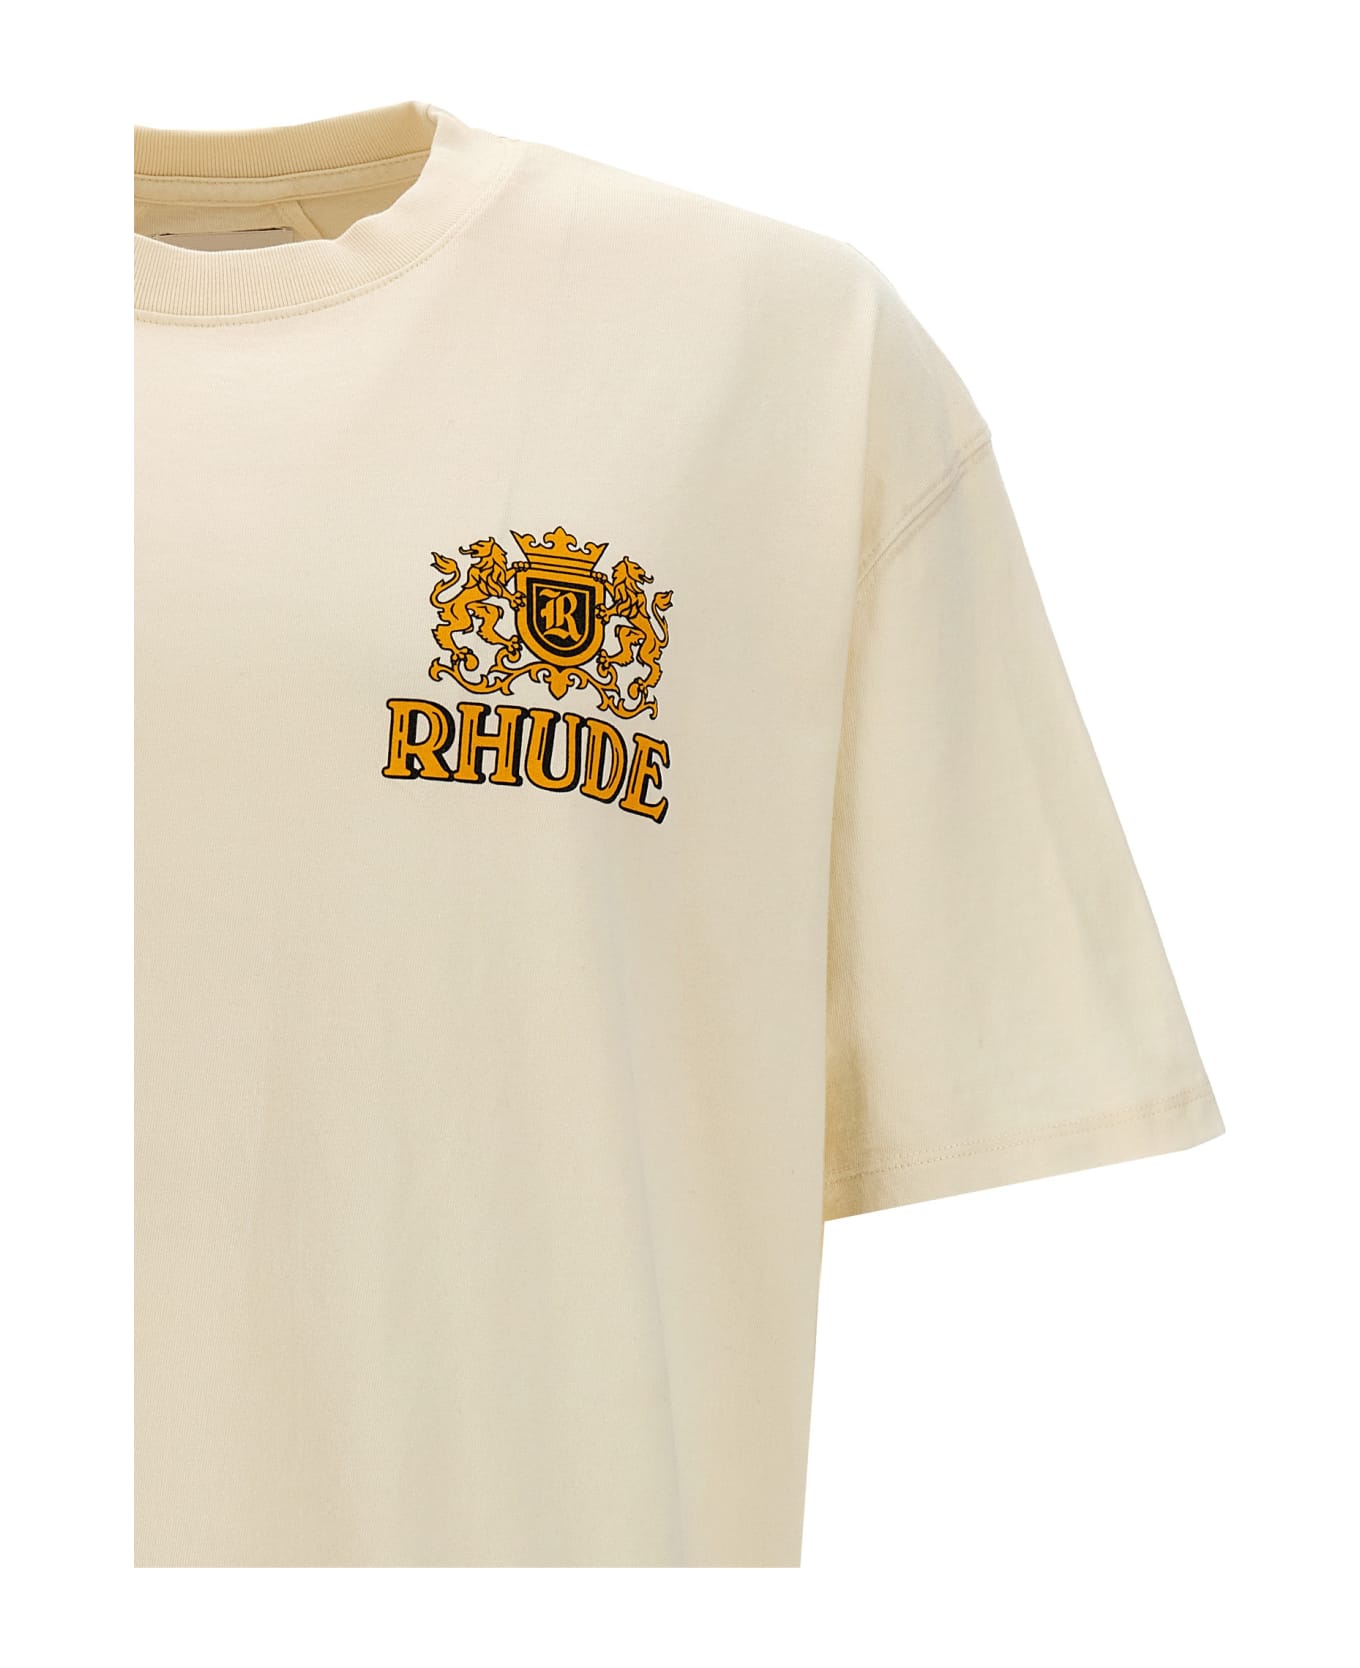 Rhude 'cresta Cigar' T-shirt - Bianco sporco